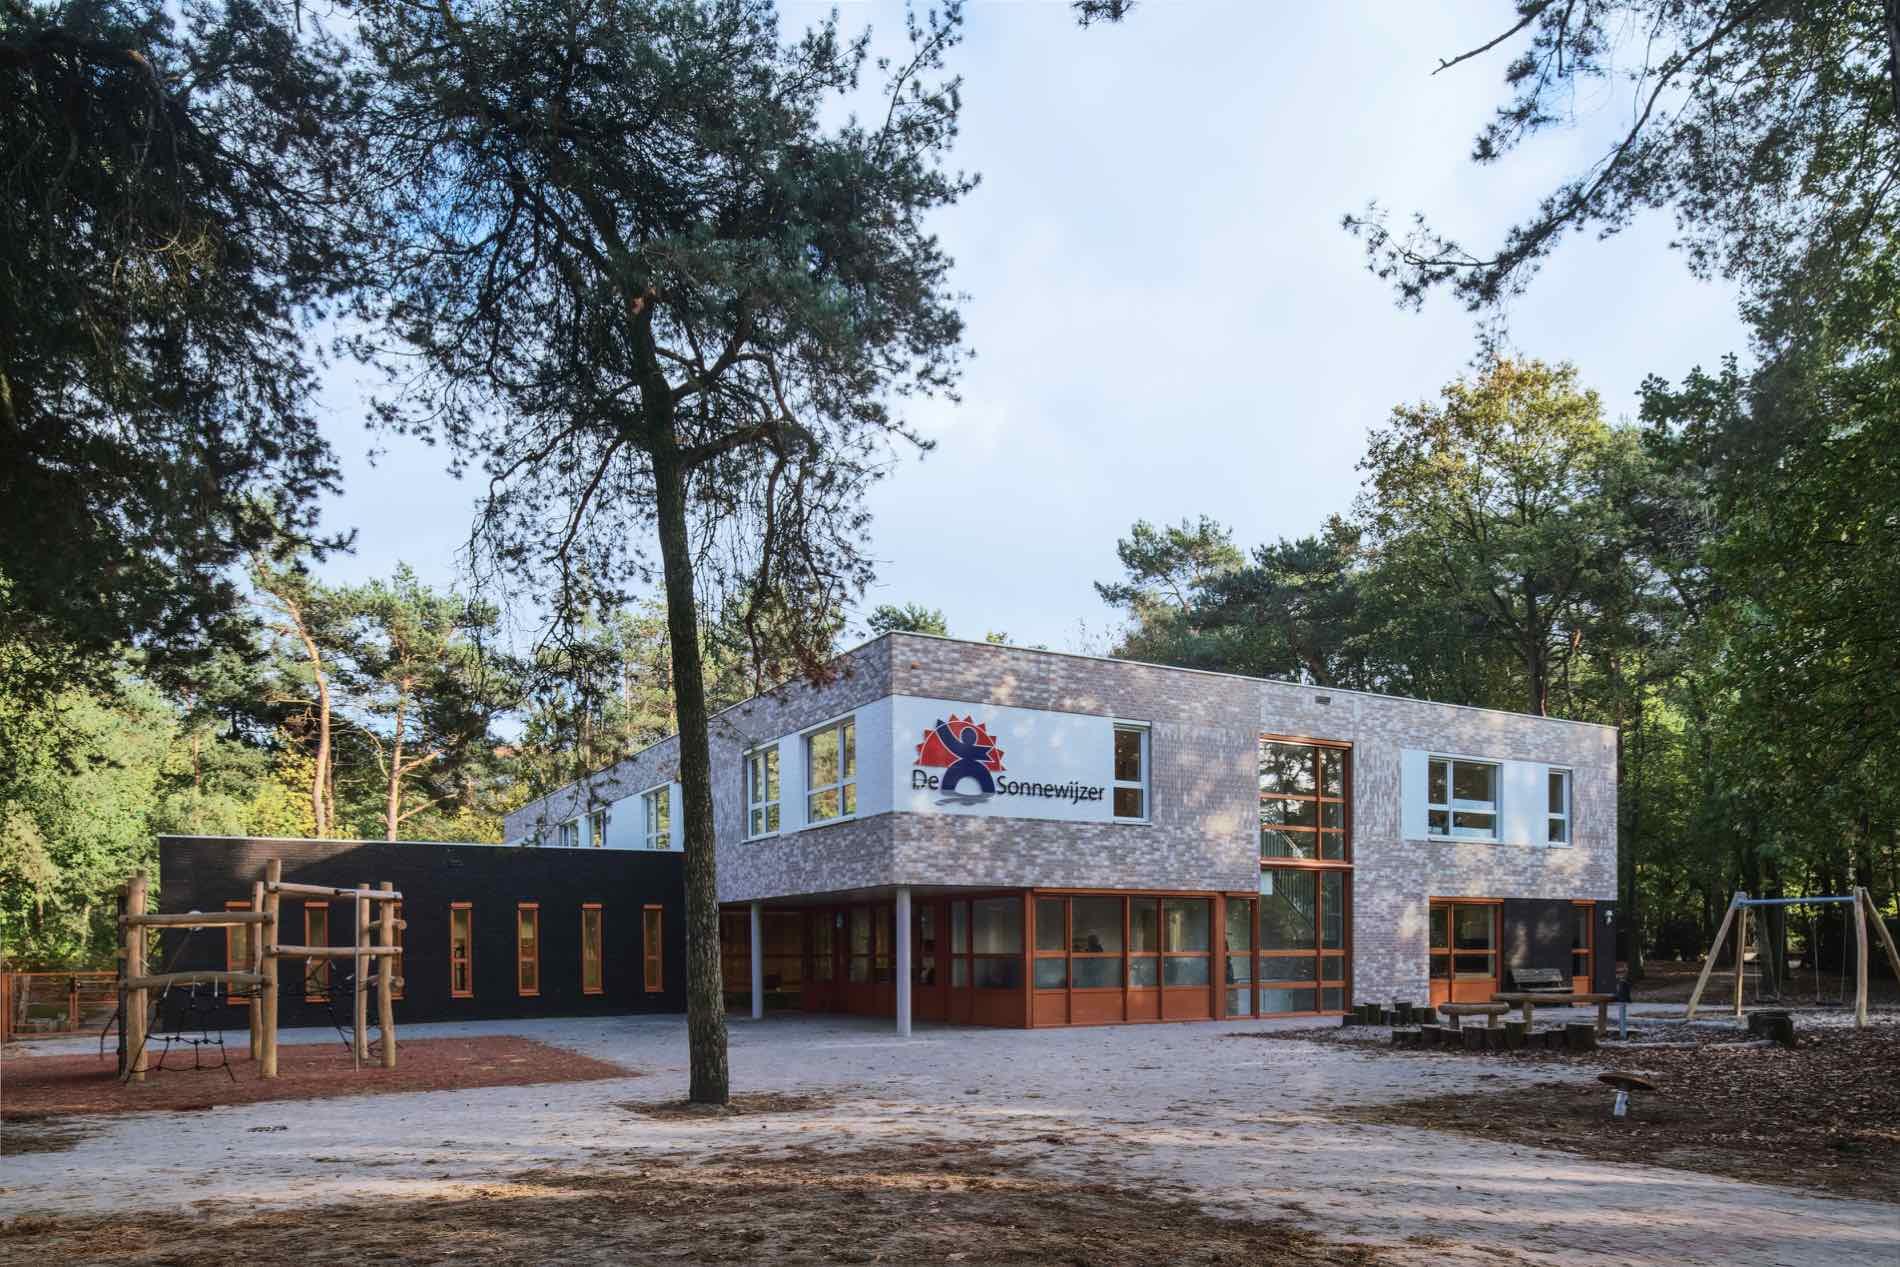 School Villa Sonnewijzer 1, Son - RAFFAAN architecten